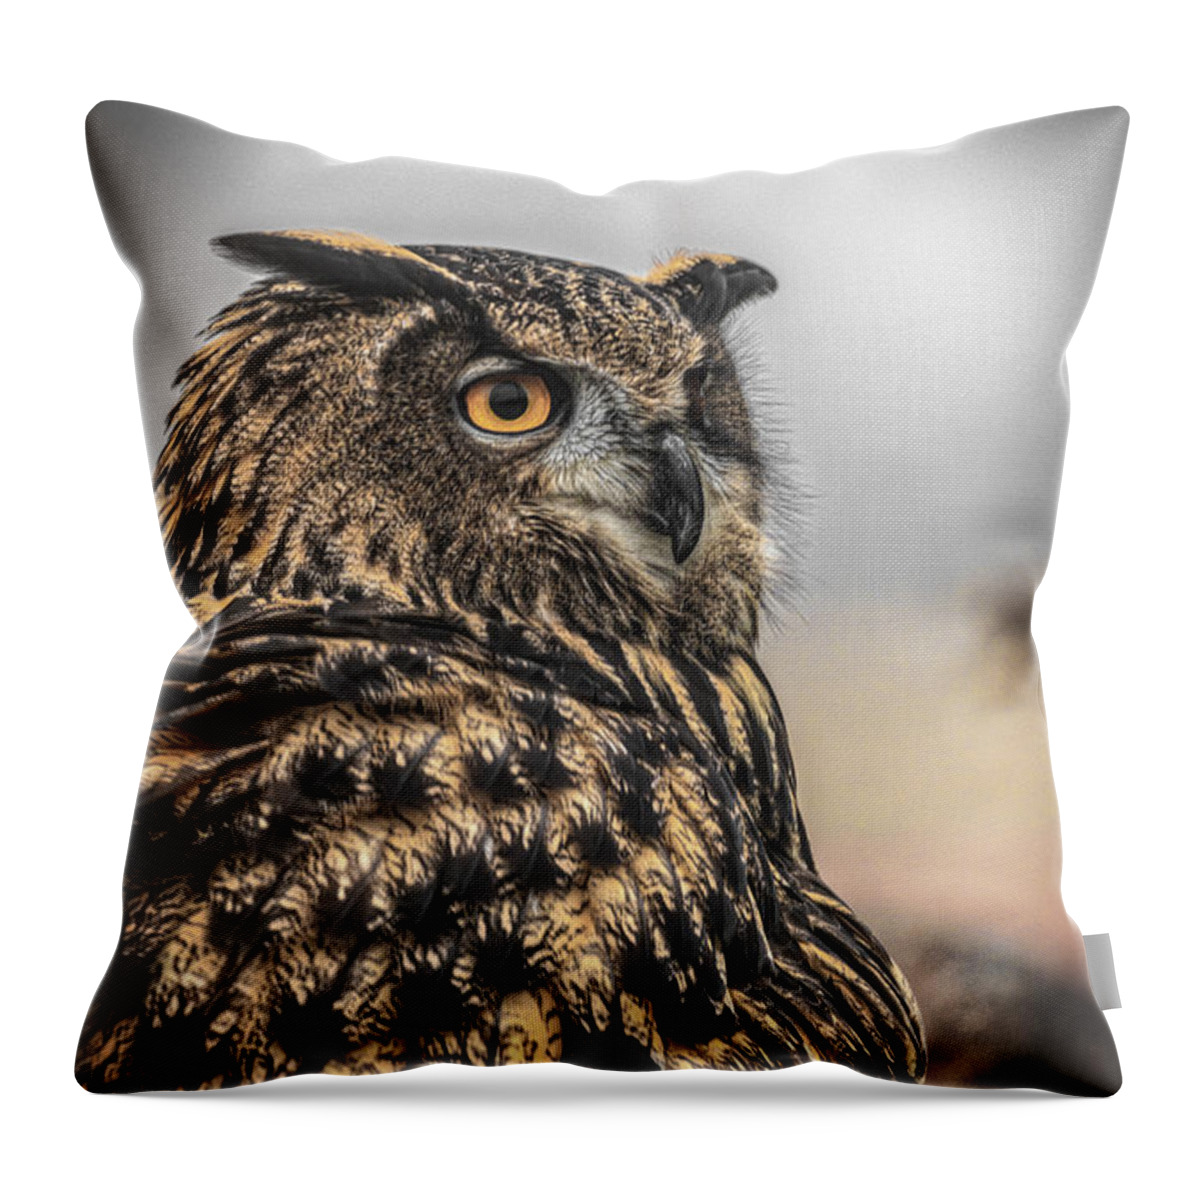 Eurasian Eagle Owl Throw Pillow featuring the photograph Eurasian Eagle Owl by Mitch Shindelbower